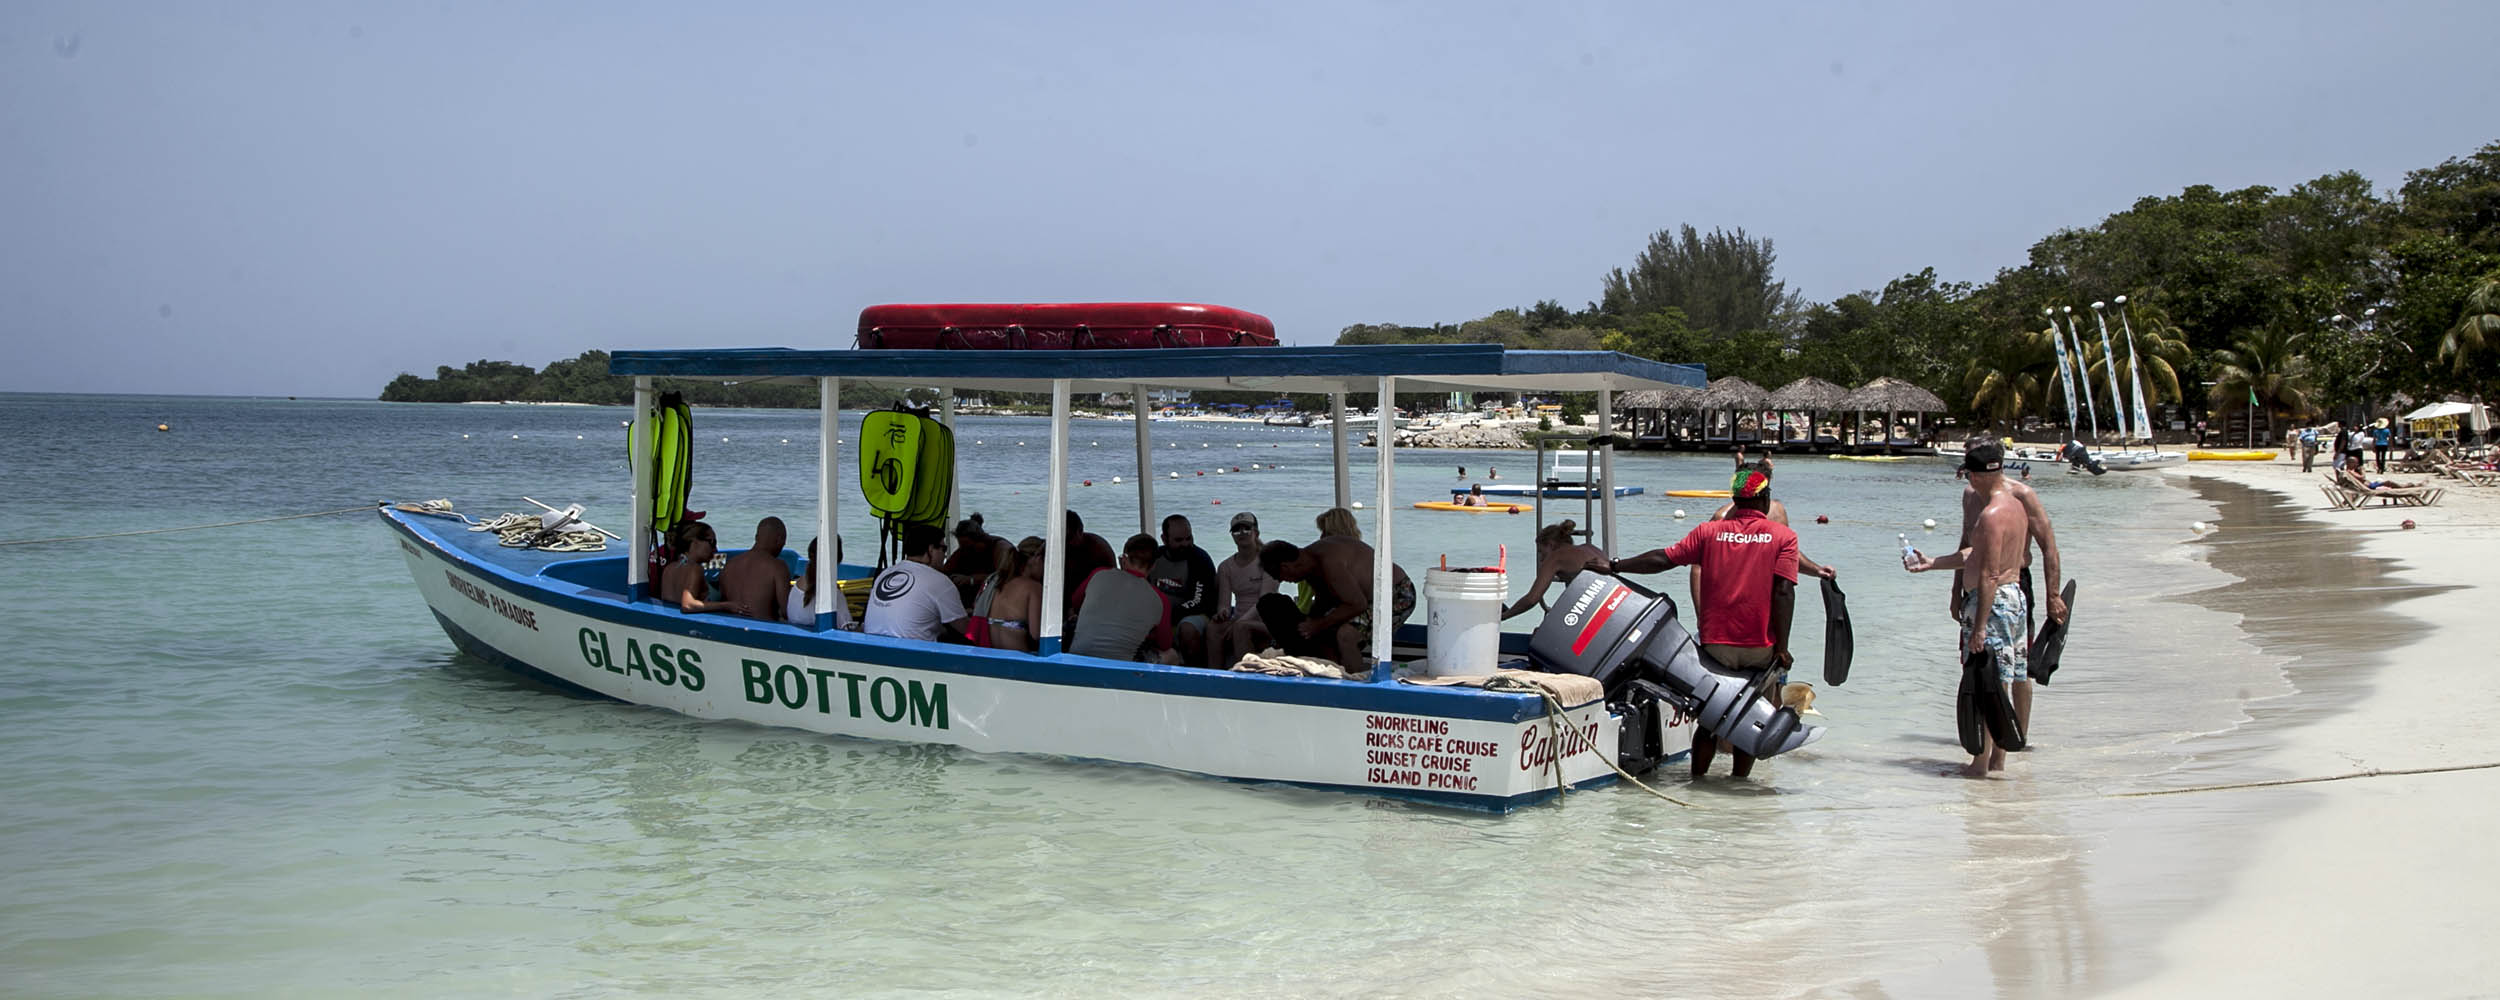 Glass Bottom Boat - Negril Jamaica